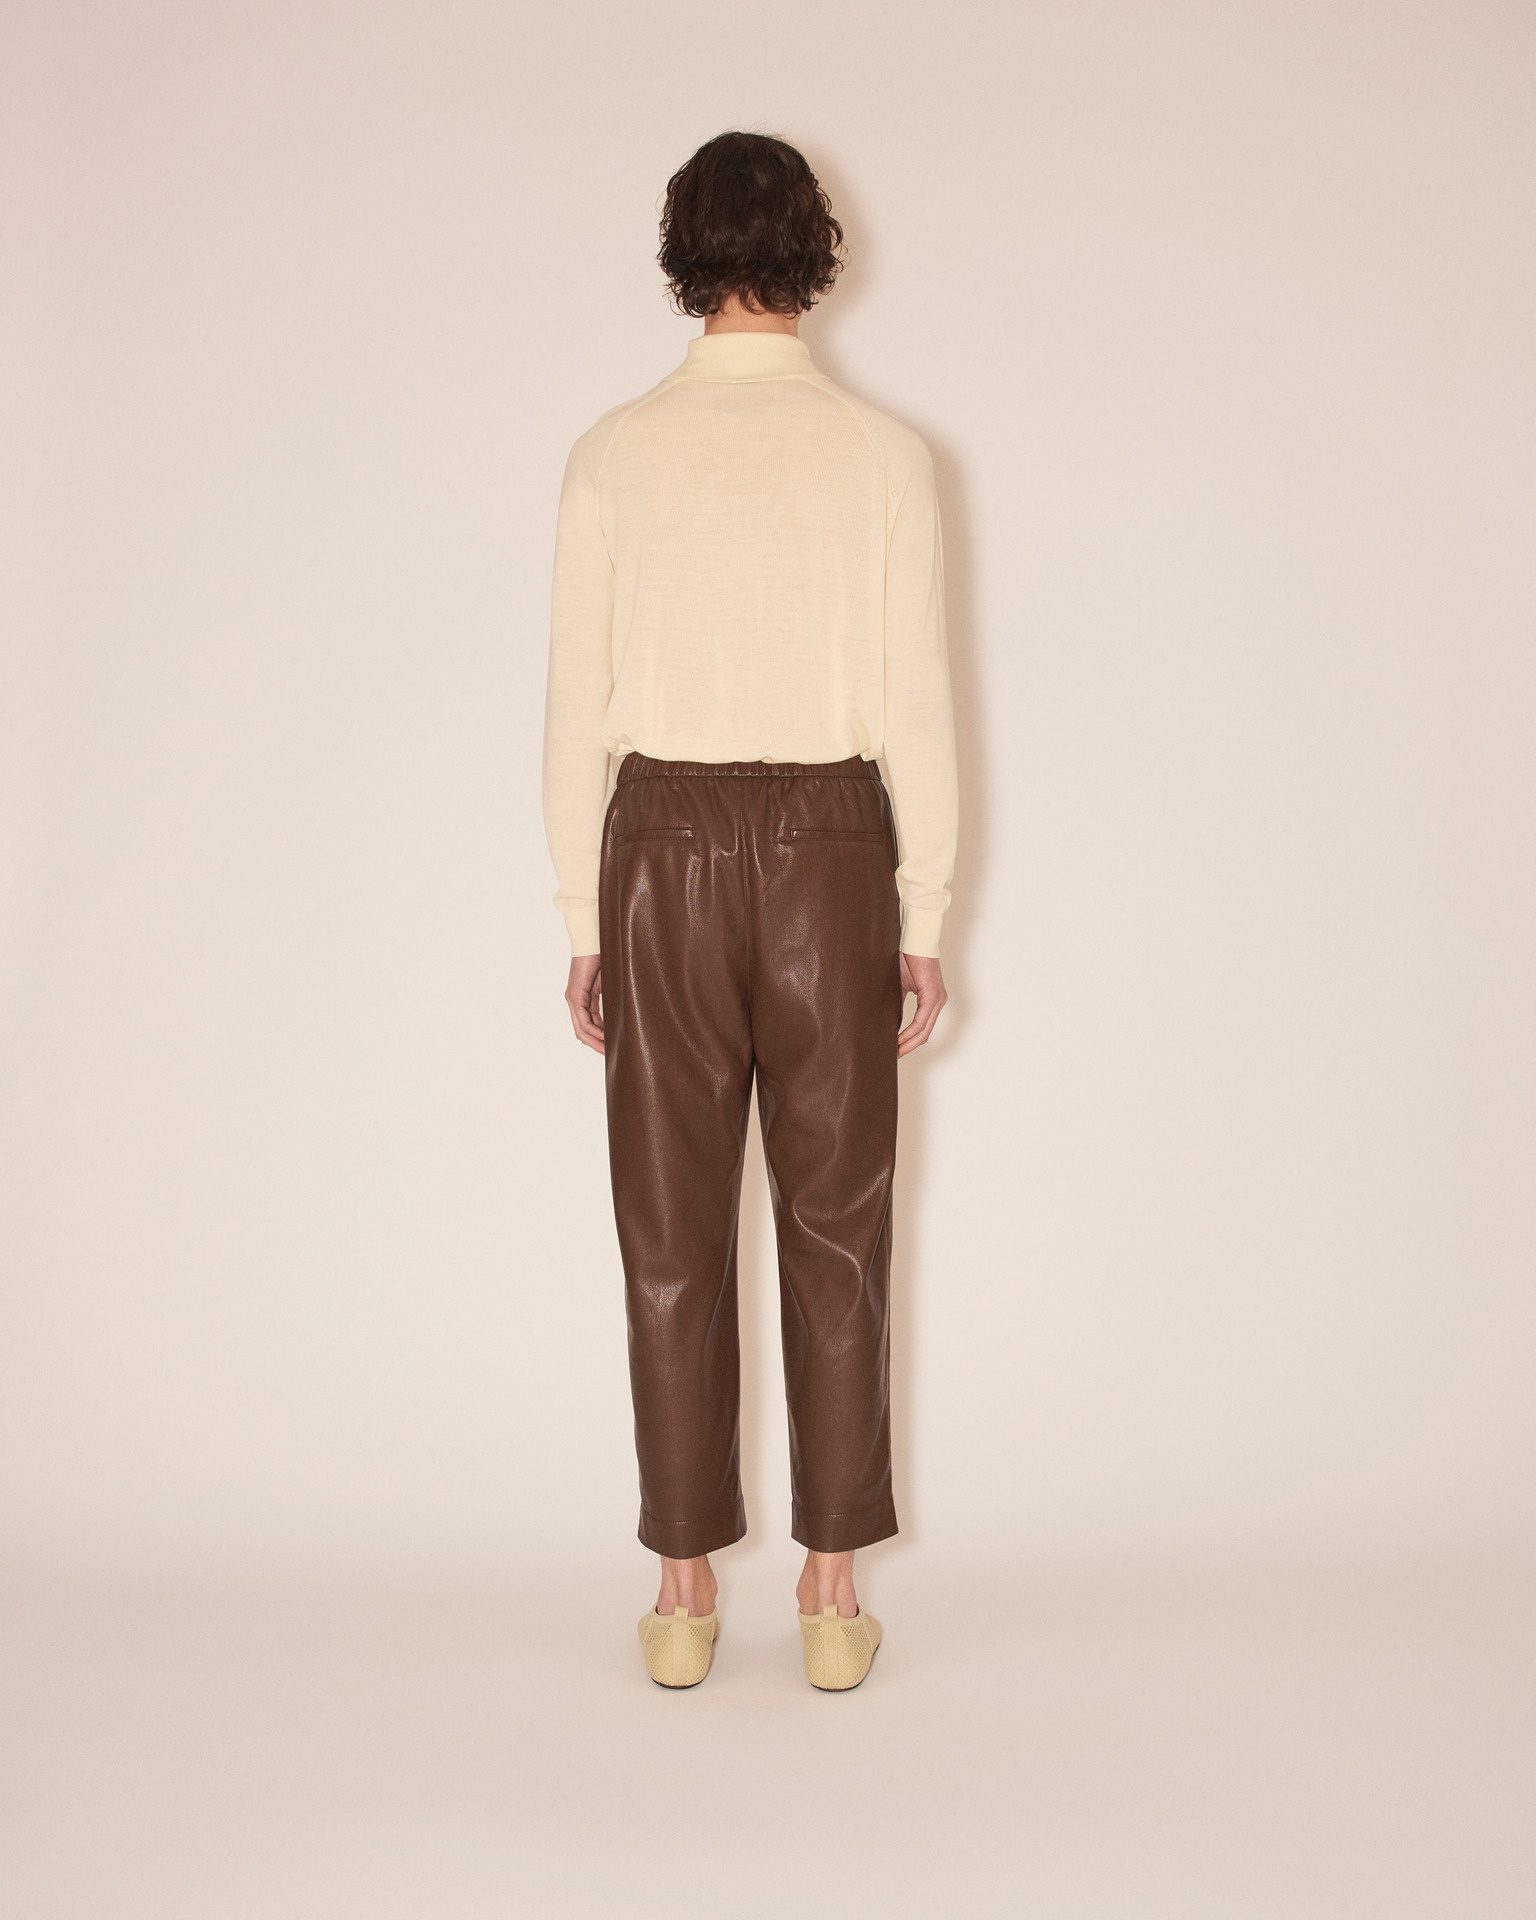 JAIN - Relaxed pants - Dark brown - 4